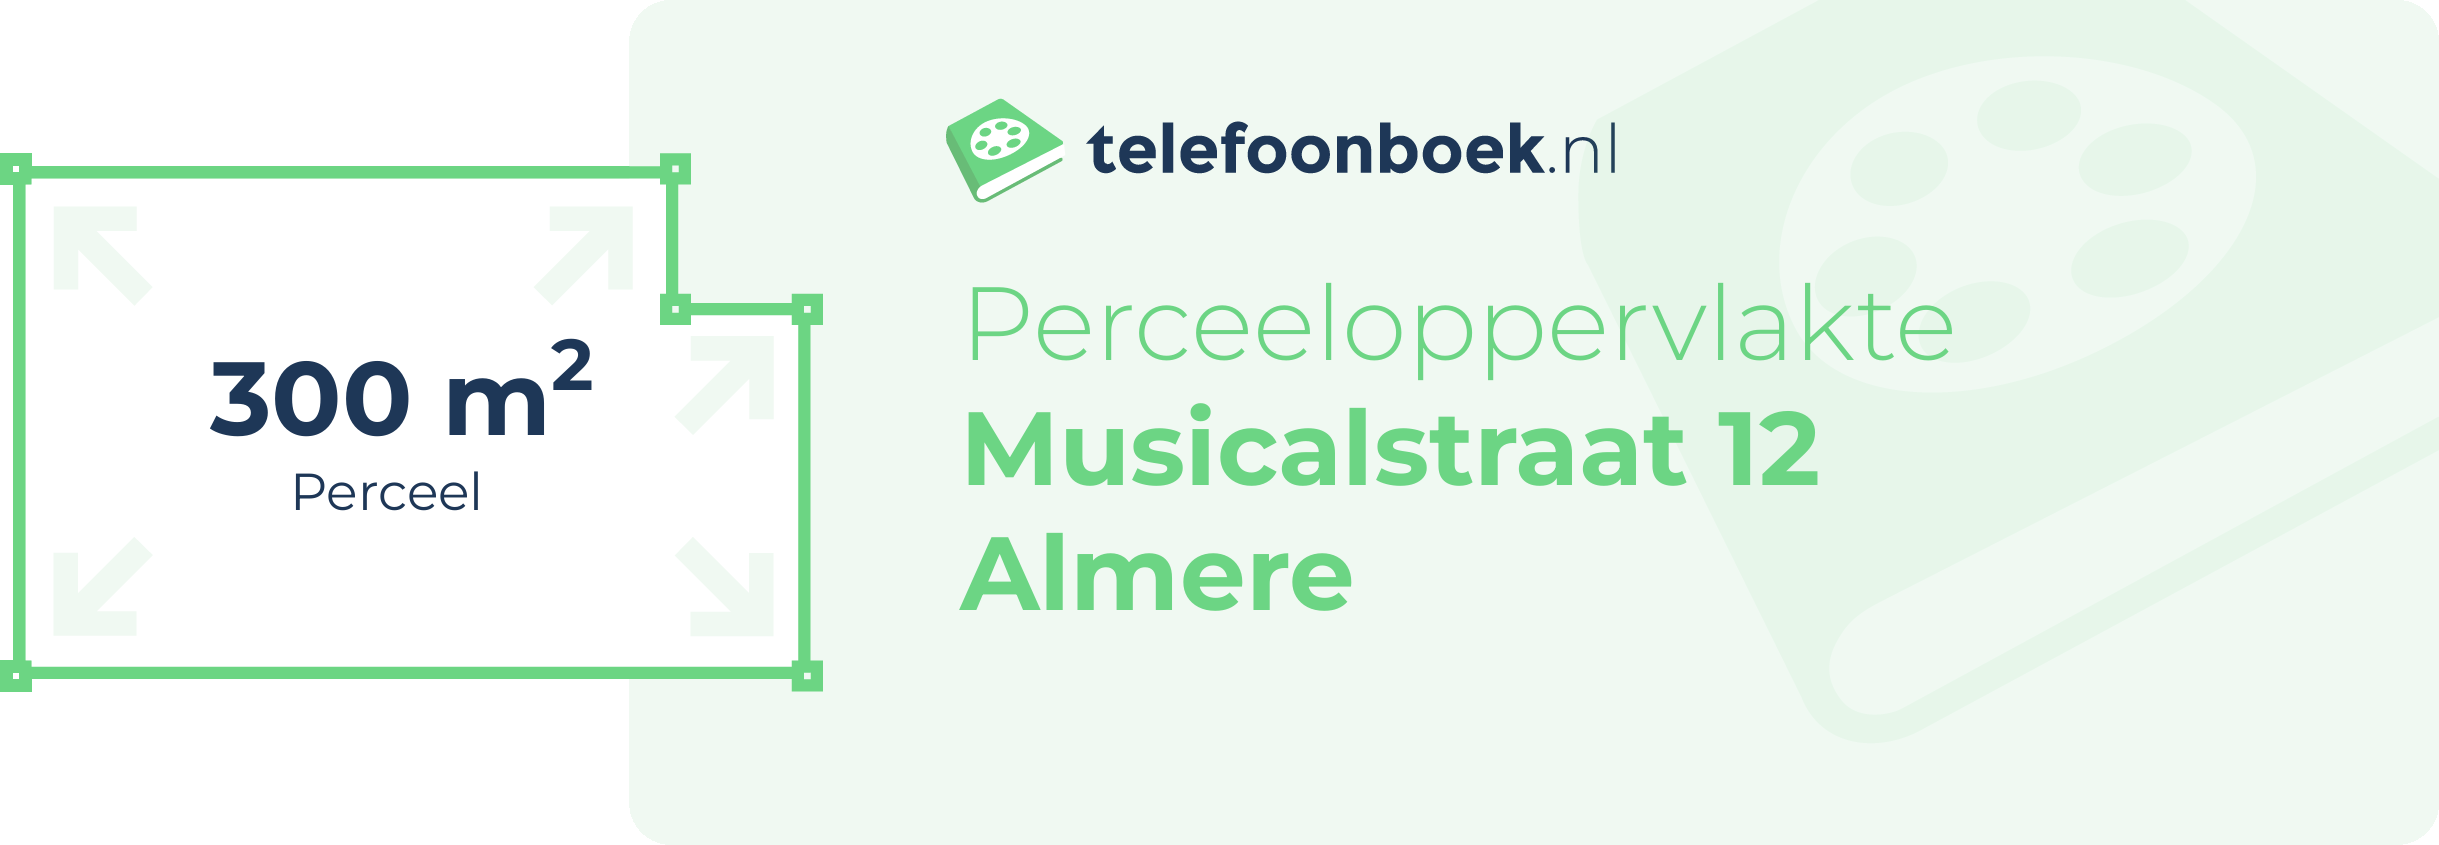 Perceeloppervlakte Musicalstraat 12 Almere